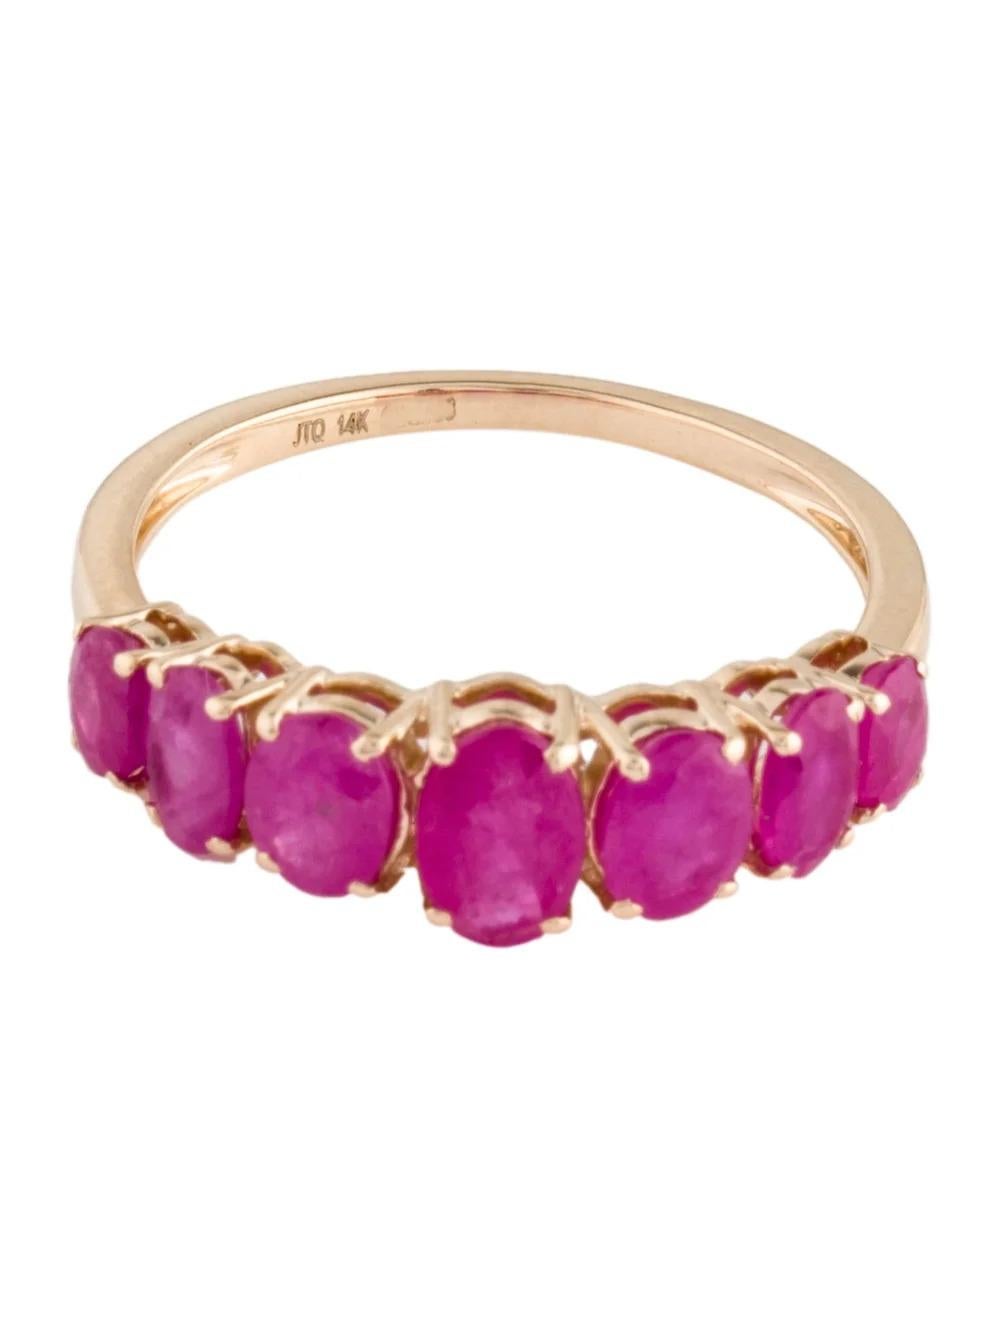 Taille ovale 14K Ruby Band Ring Size 8 - Vibrant Gemstone, Yellow Gold, Elegant Design en vente